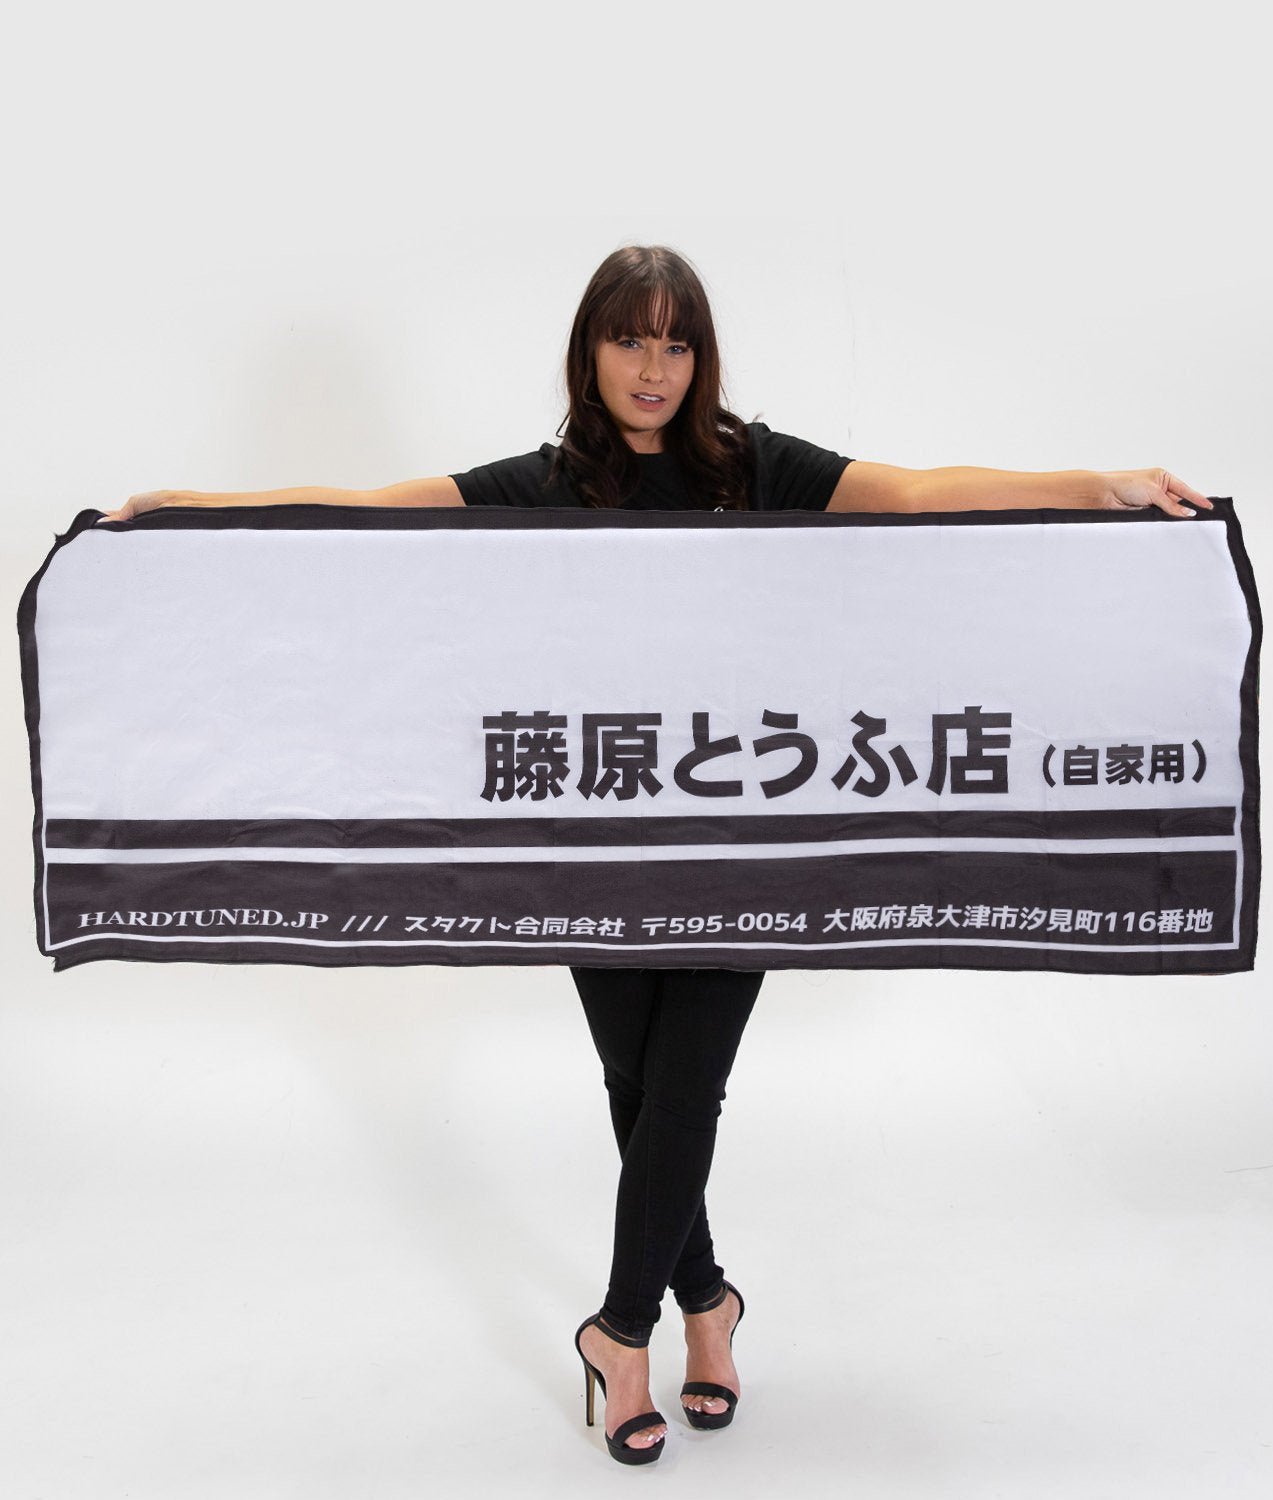 JDM Fujiwara Tofu Workshop Flag Banner - Hardtuned